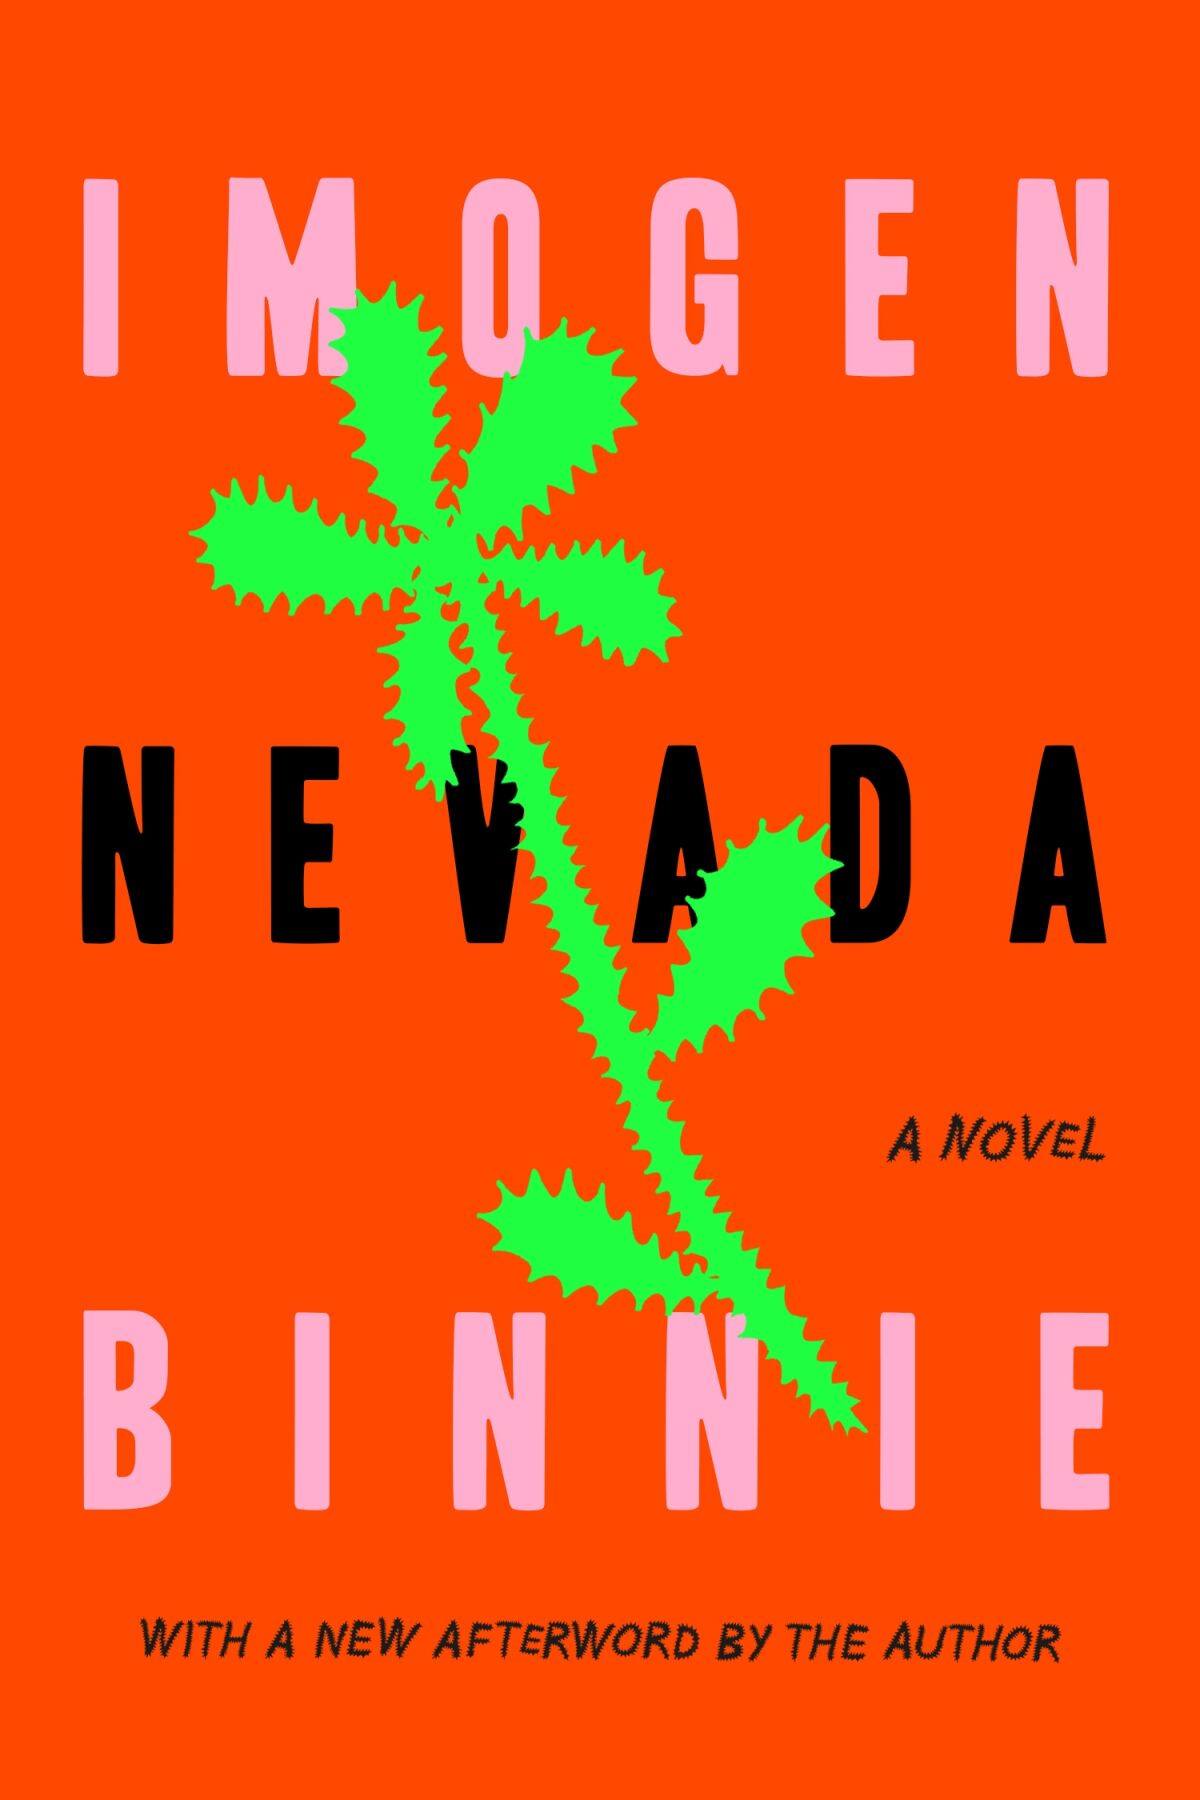 "Nevada" by Imogen Binnie